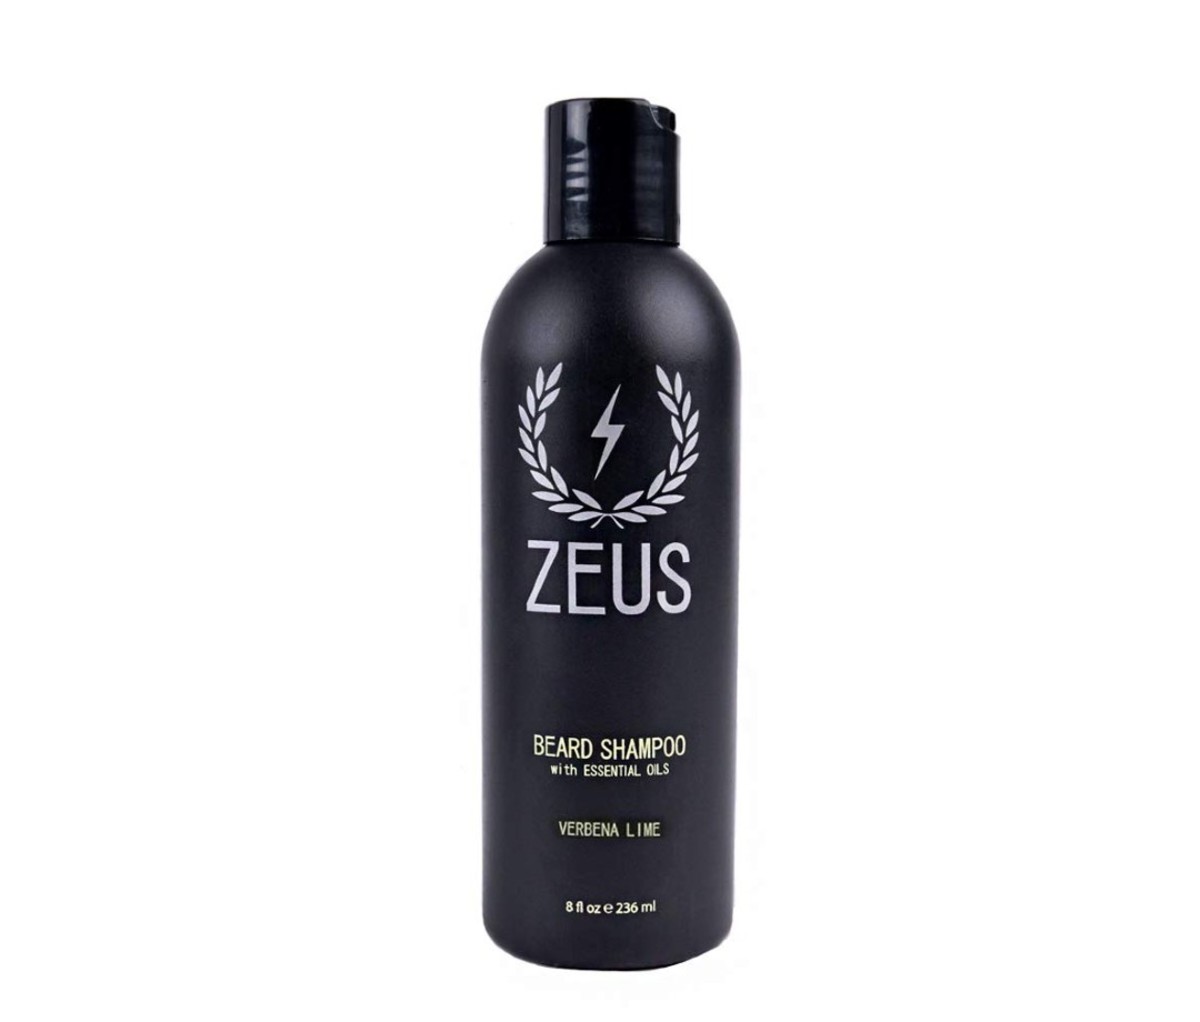 Zeus Beard Shampoo Wash